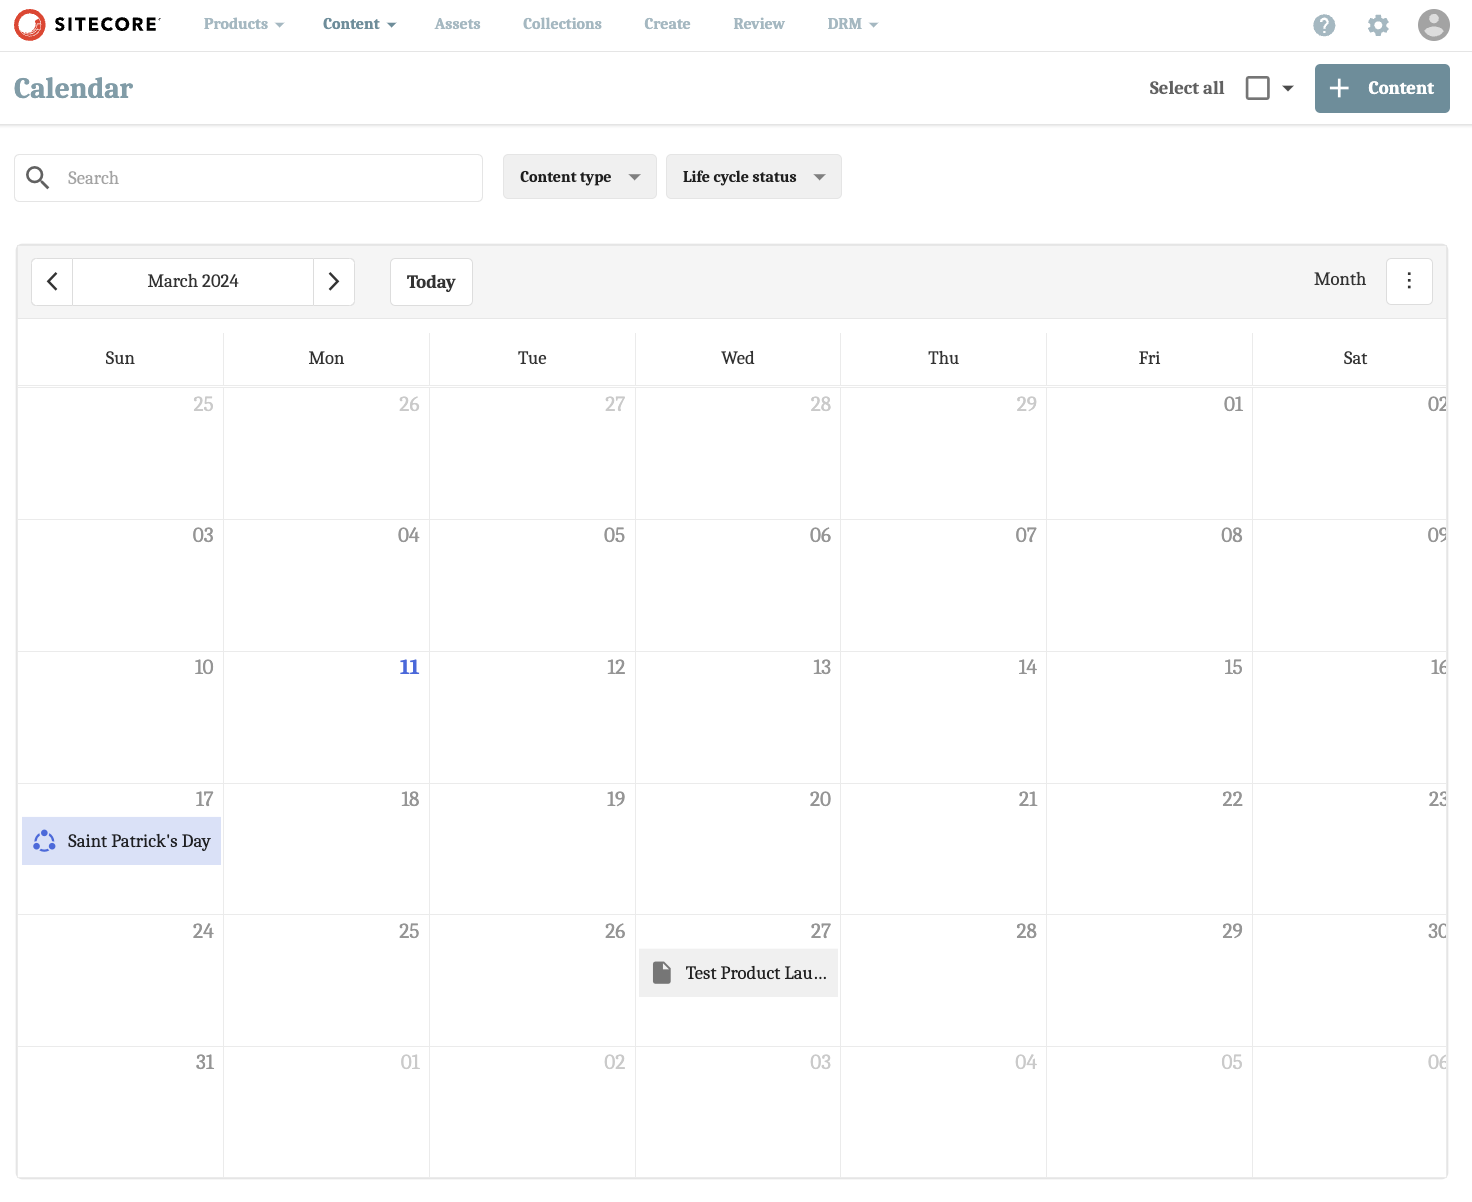 Screenshot of the Calendar Page in Sitecore CMP